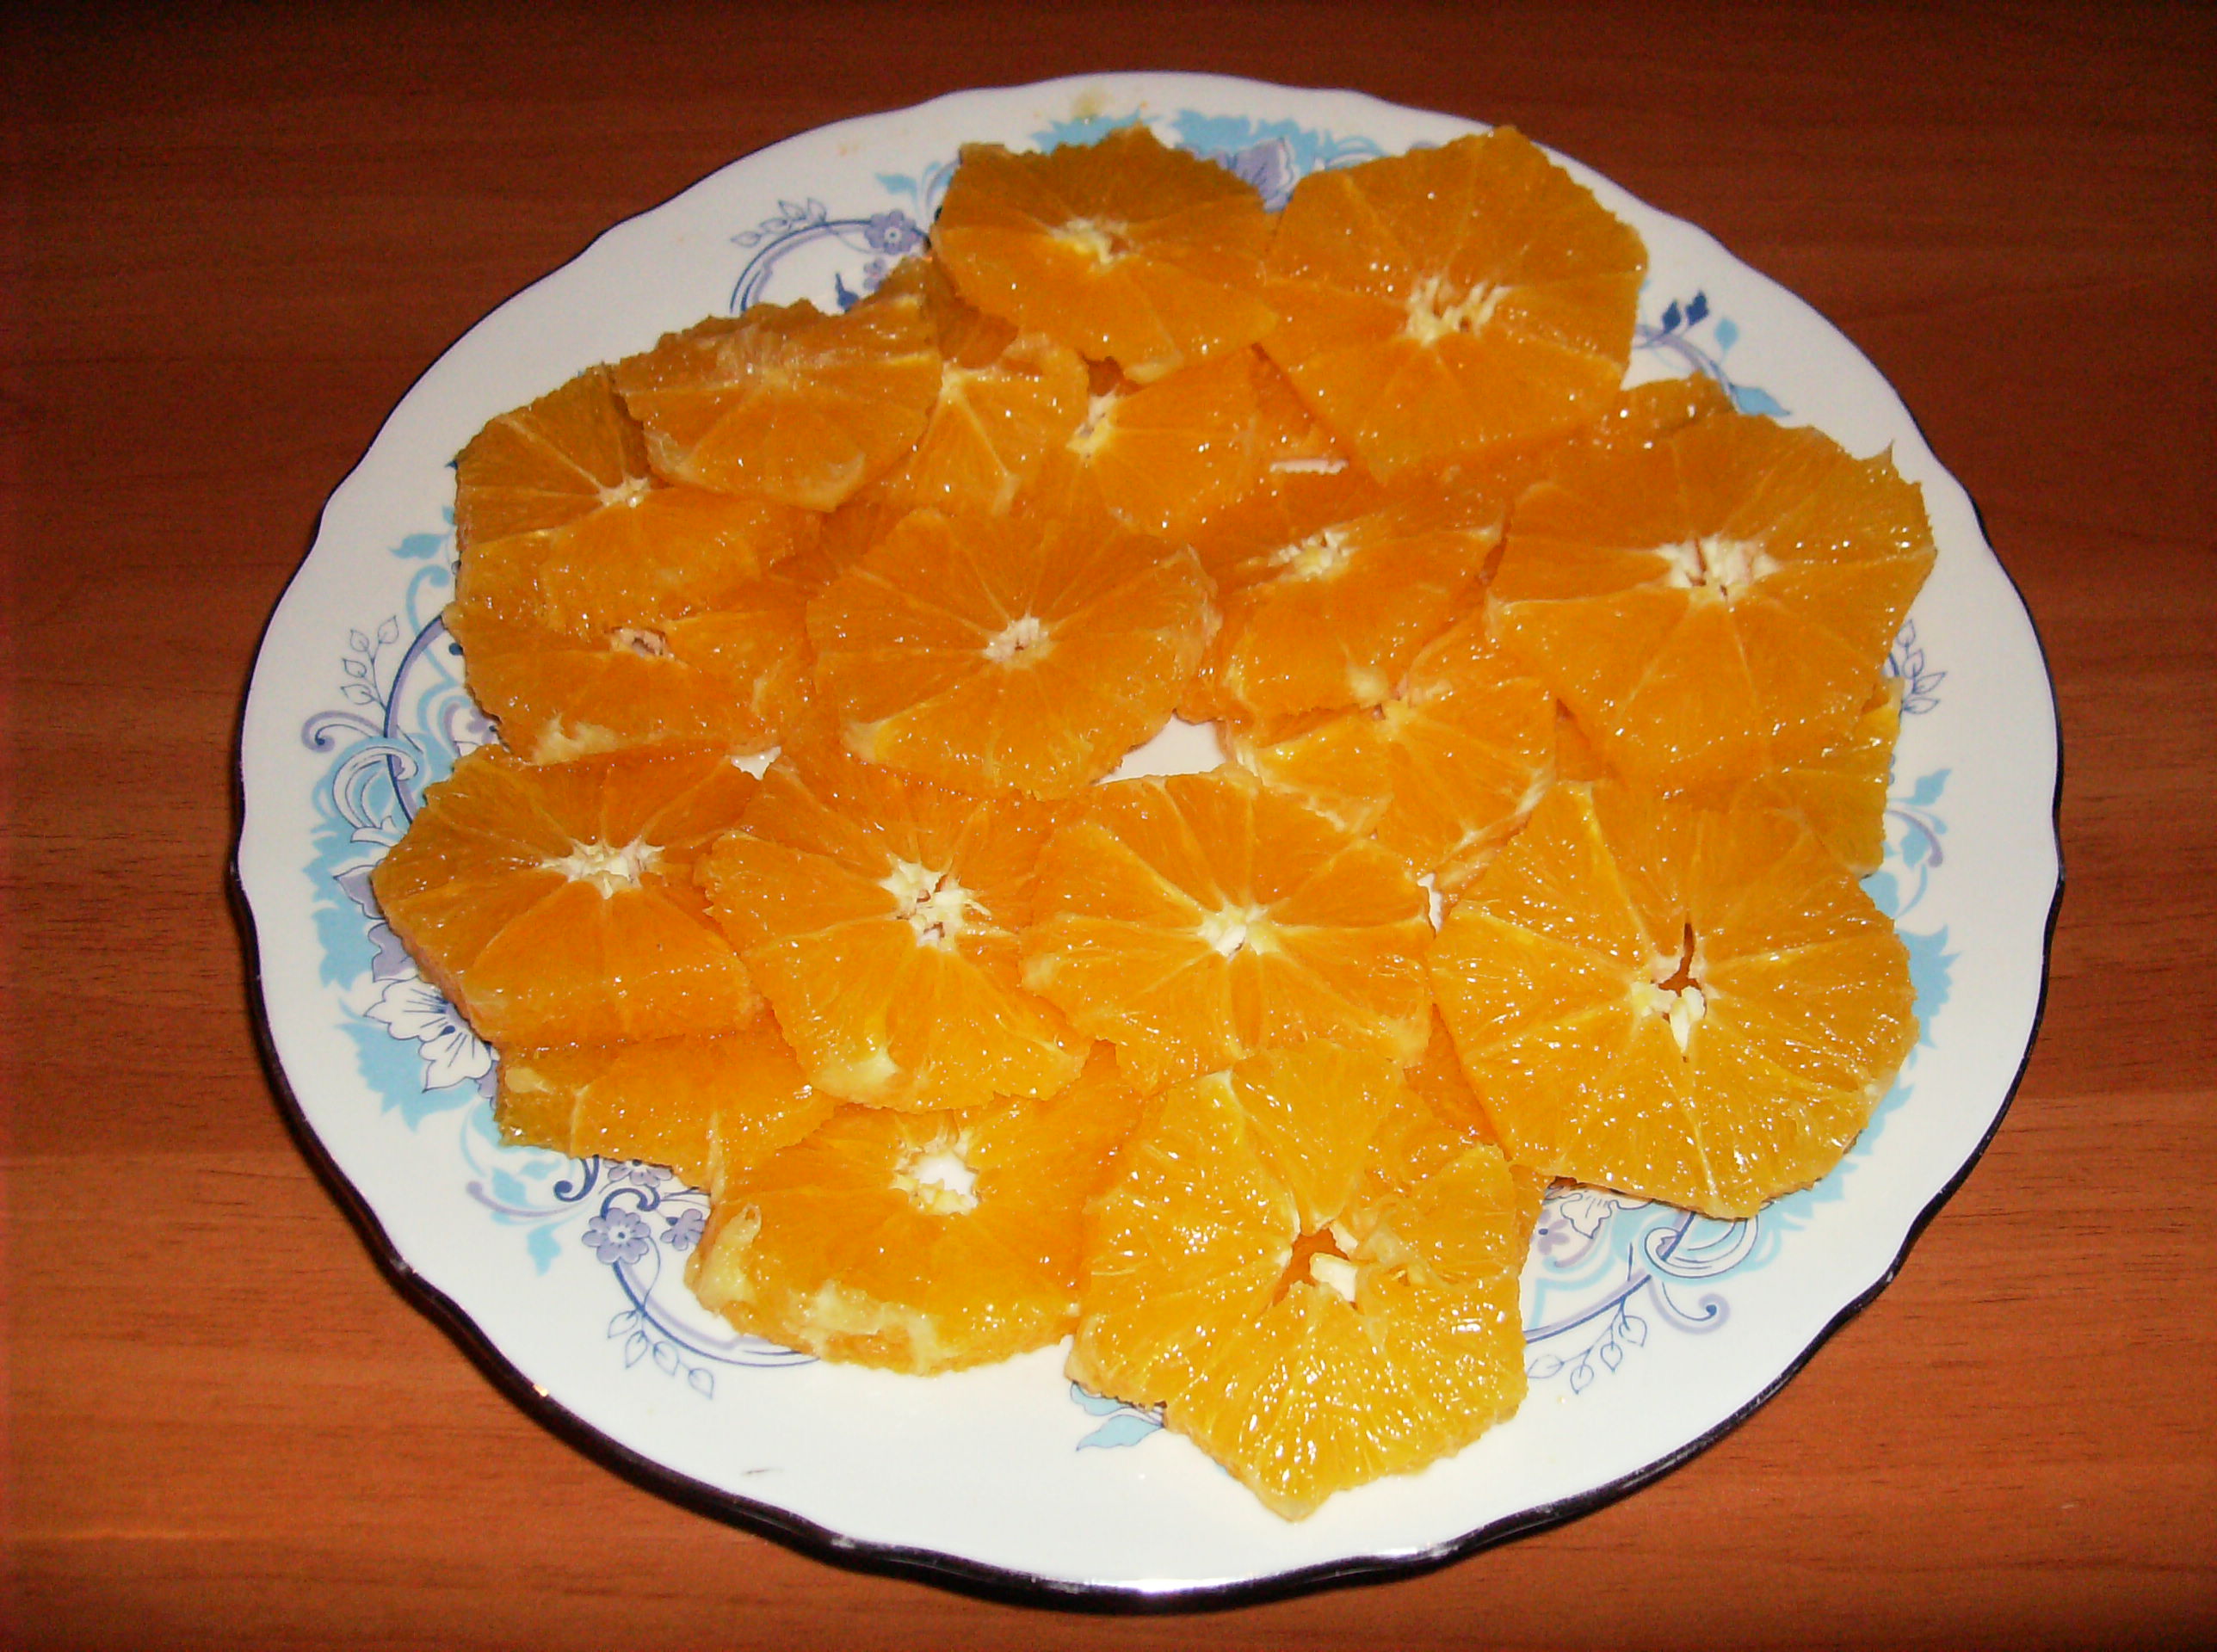 Charlotta de portocale